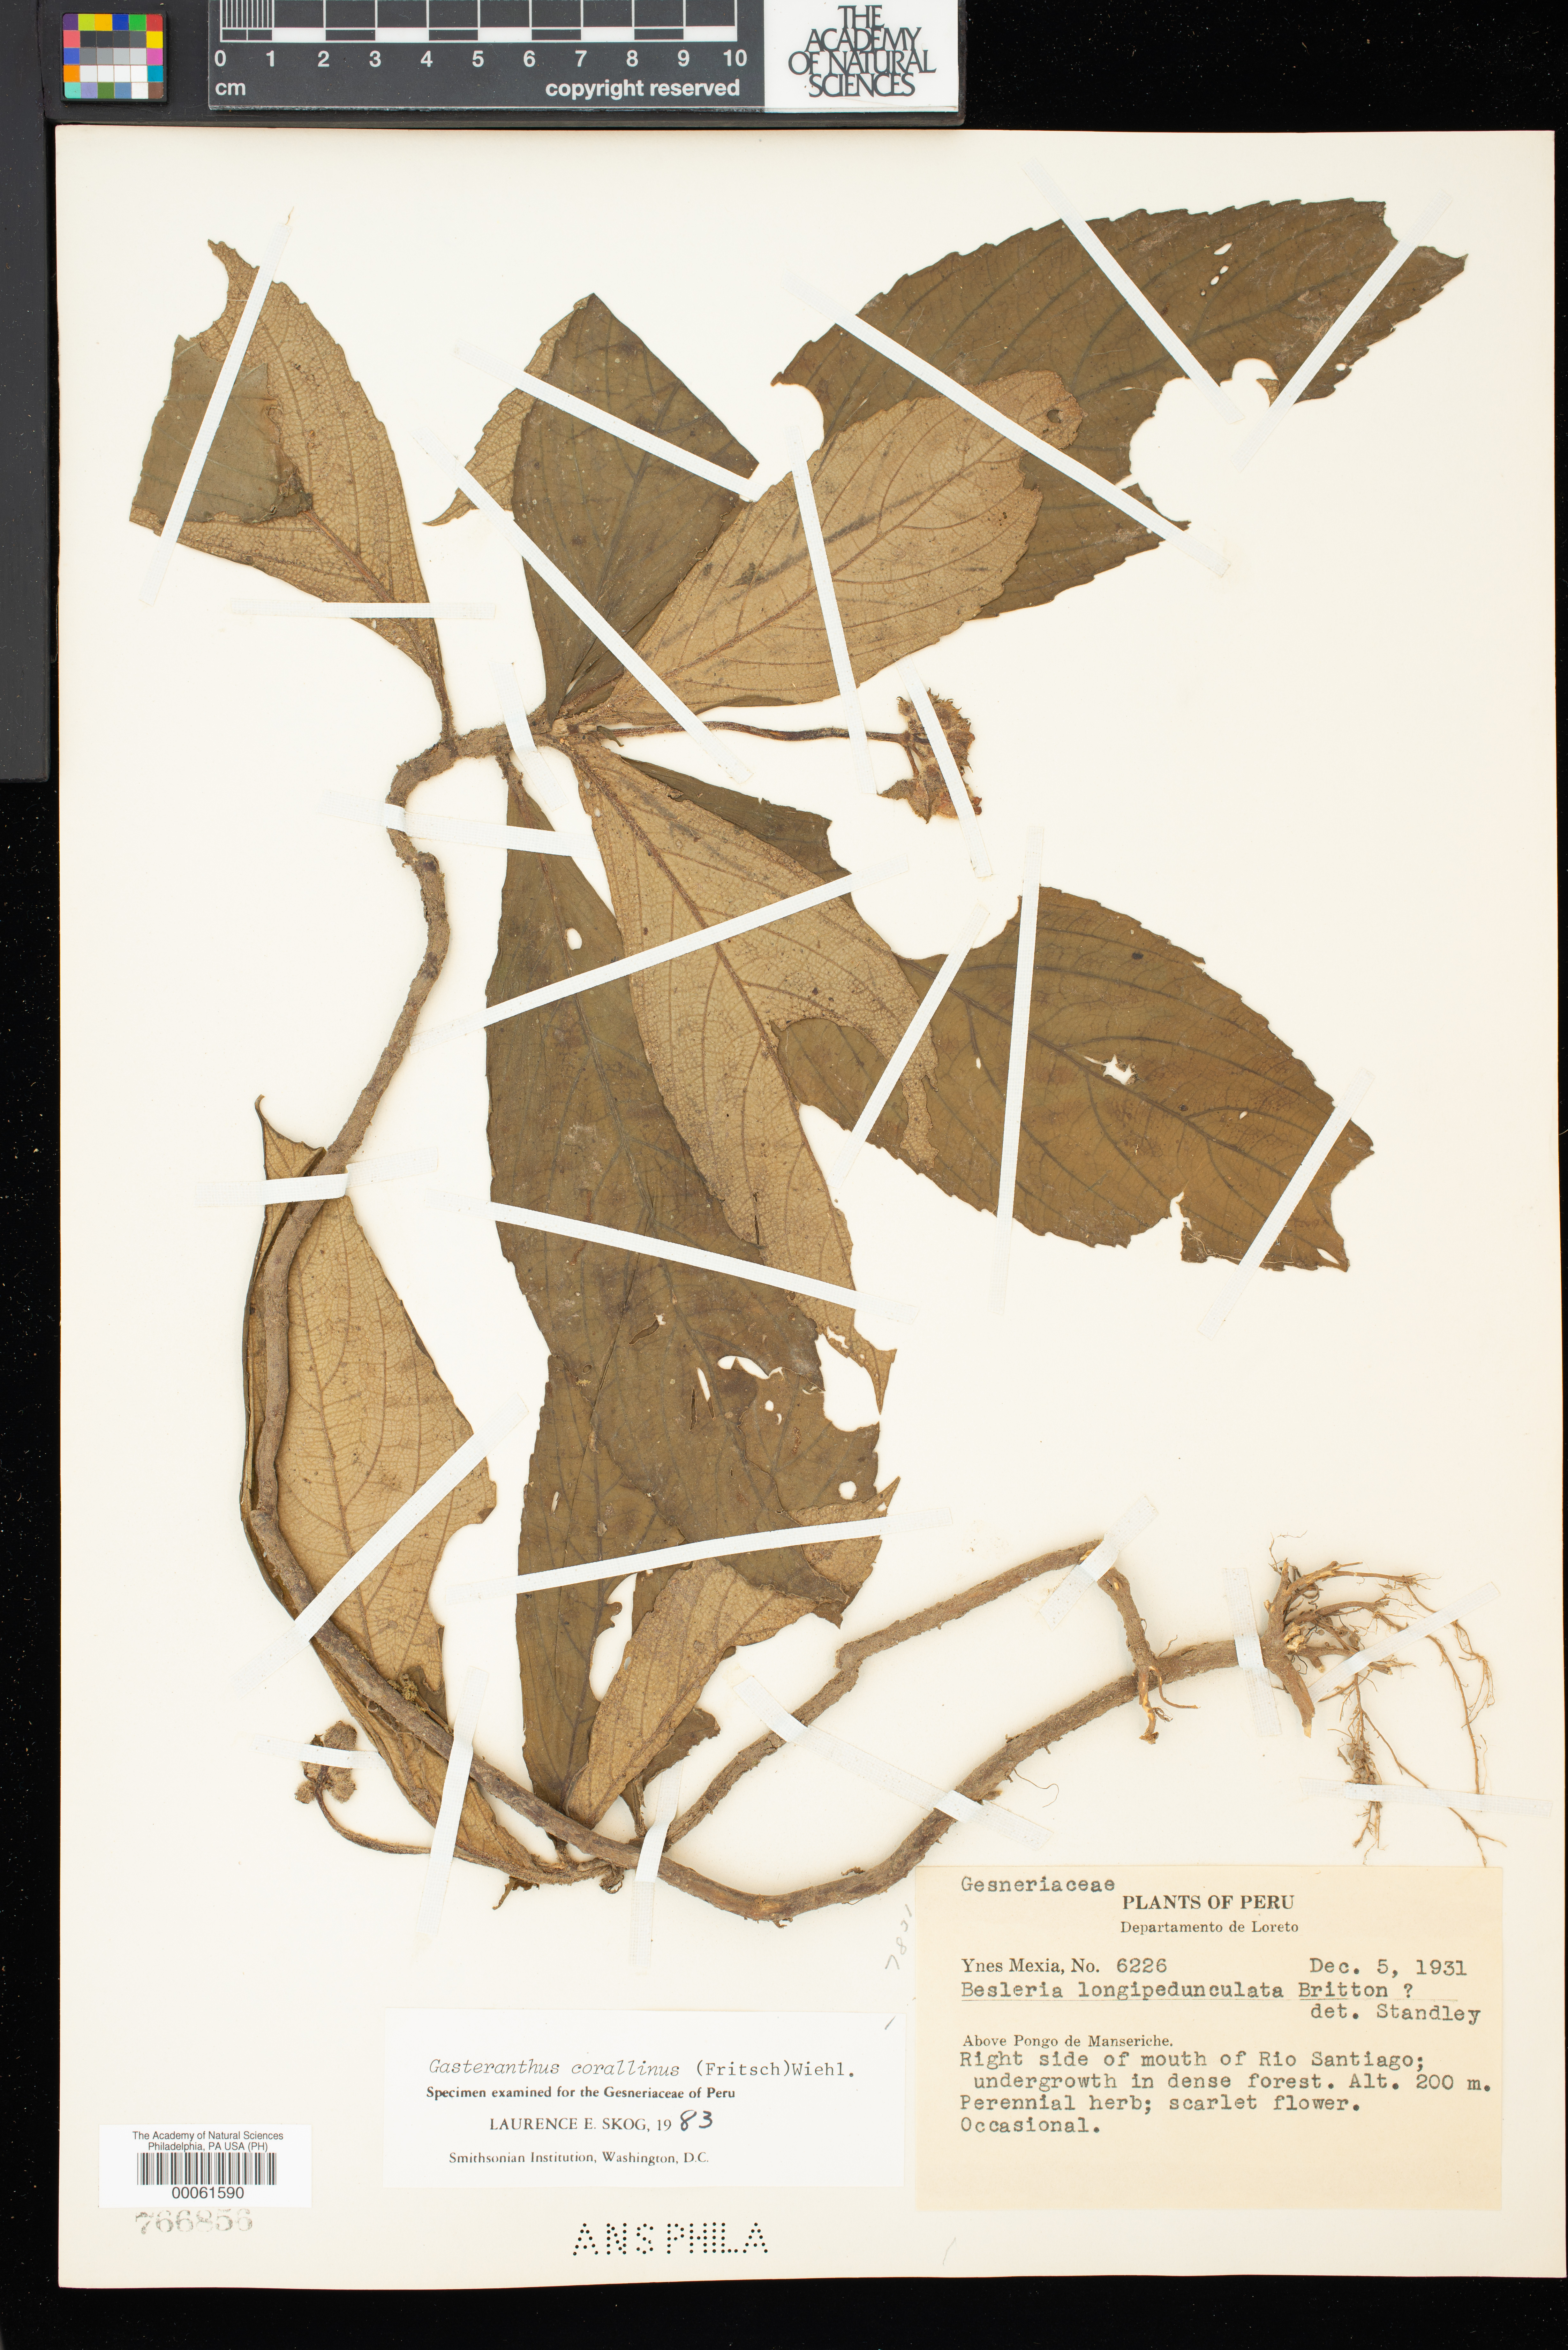 Gasteranthus image